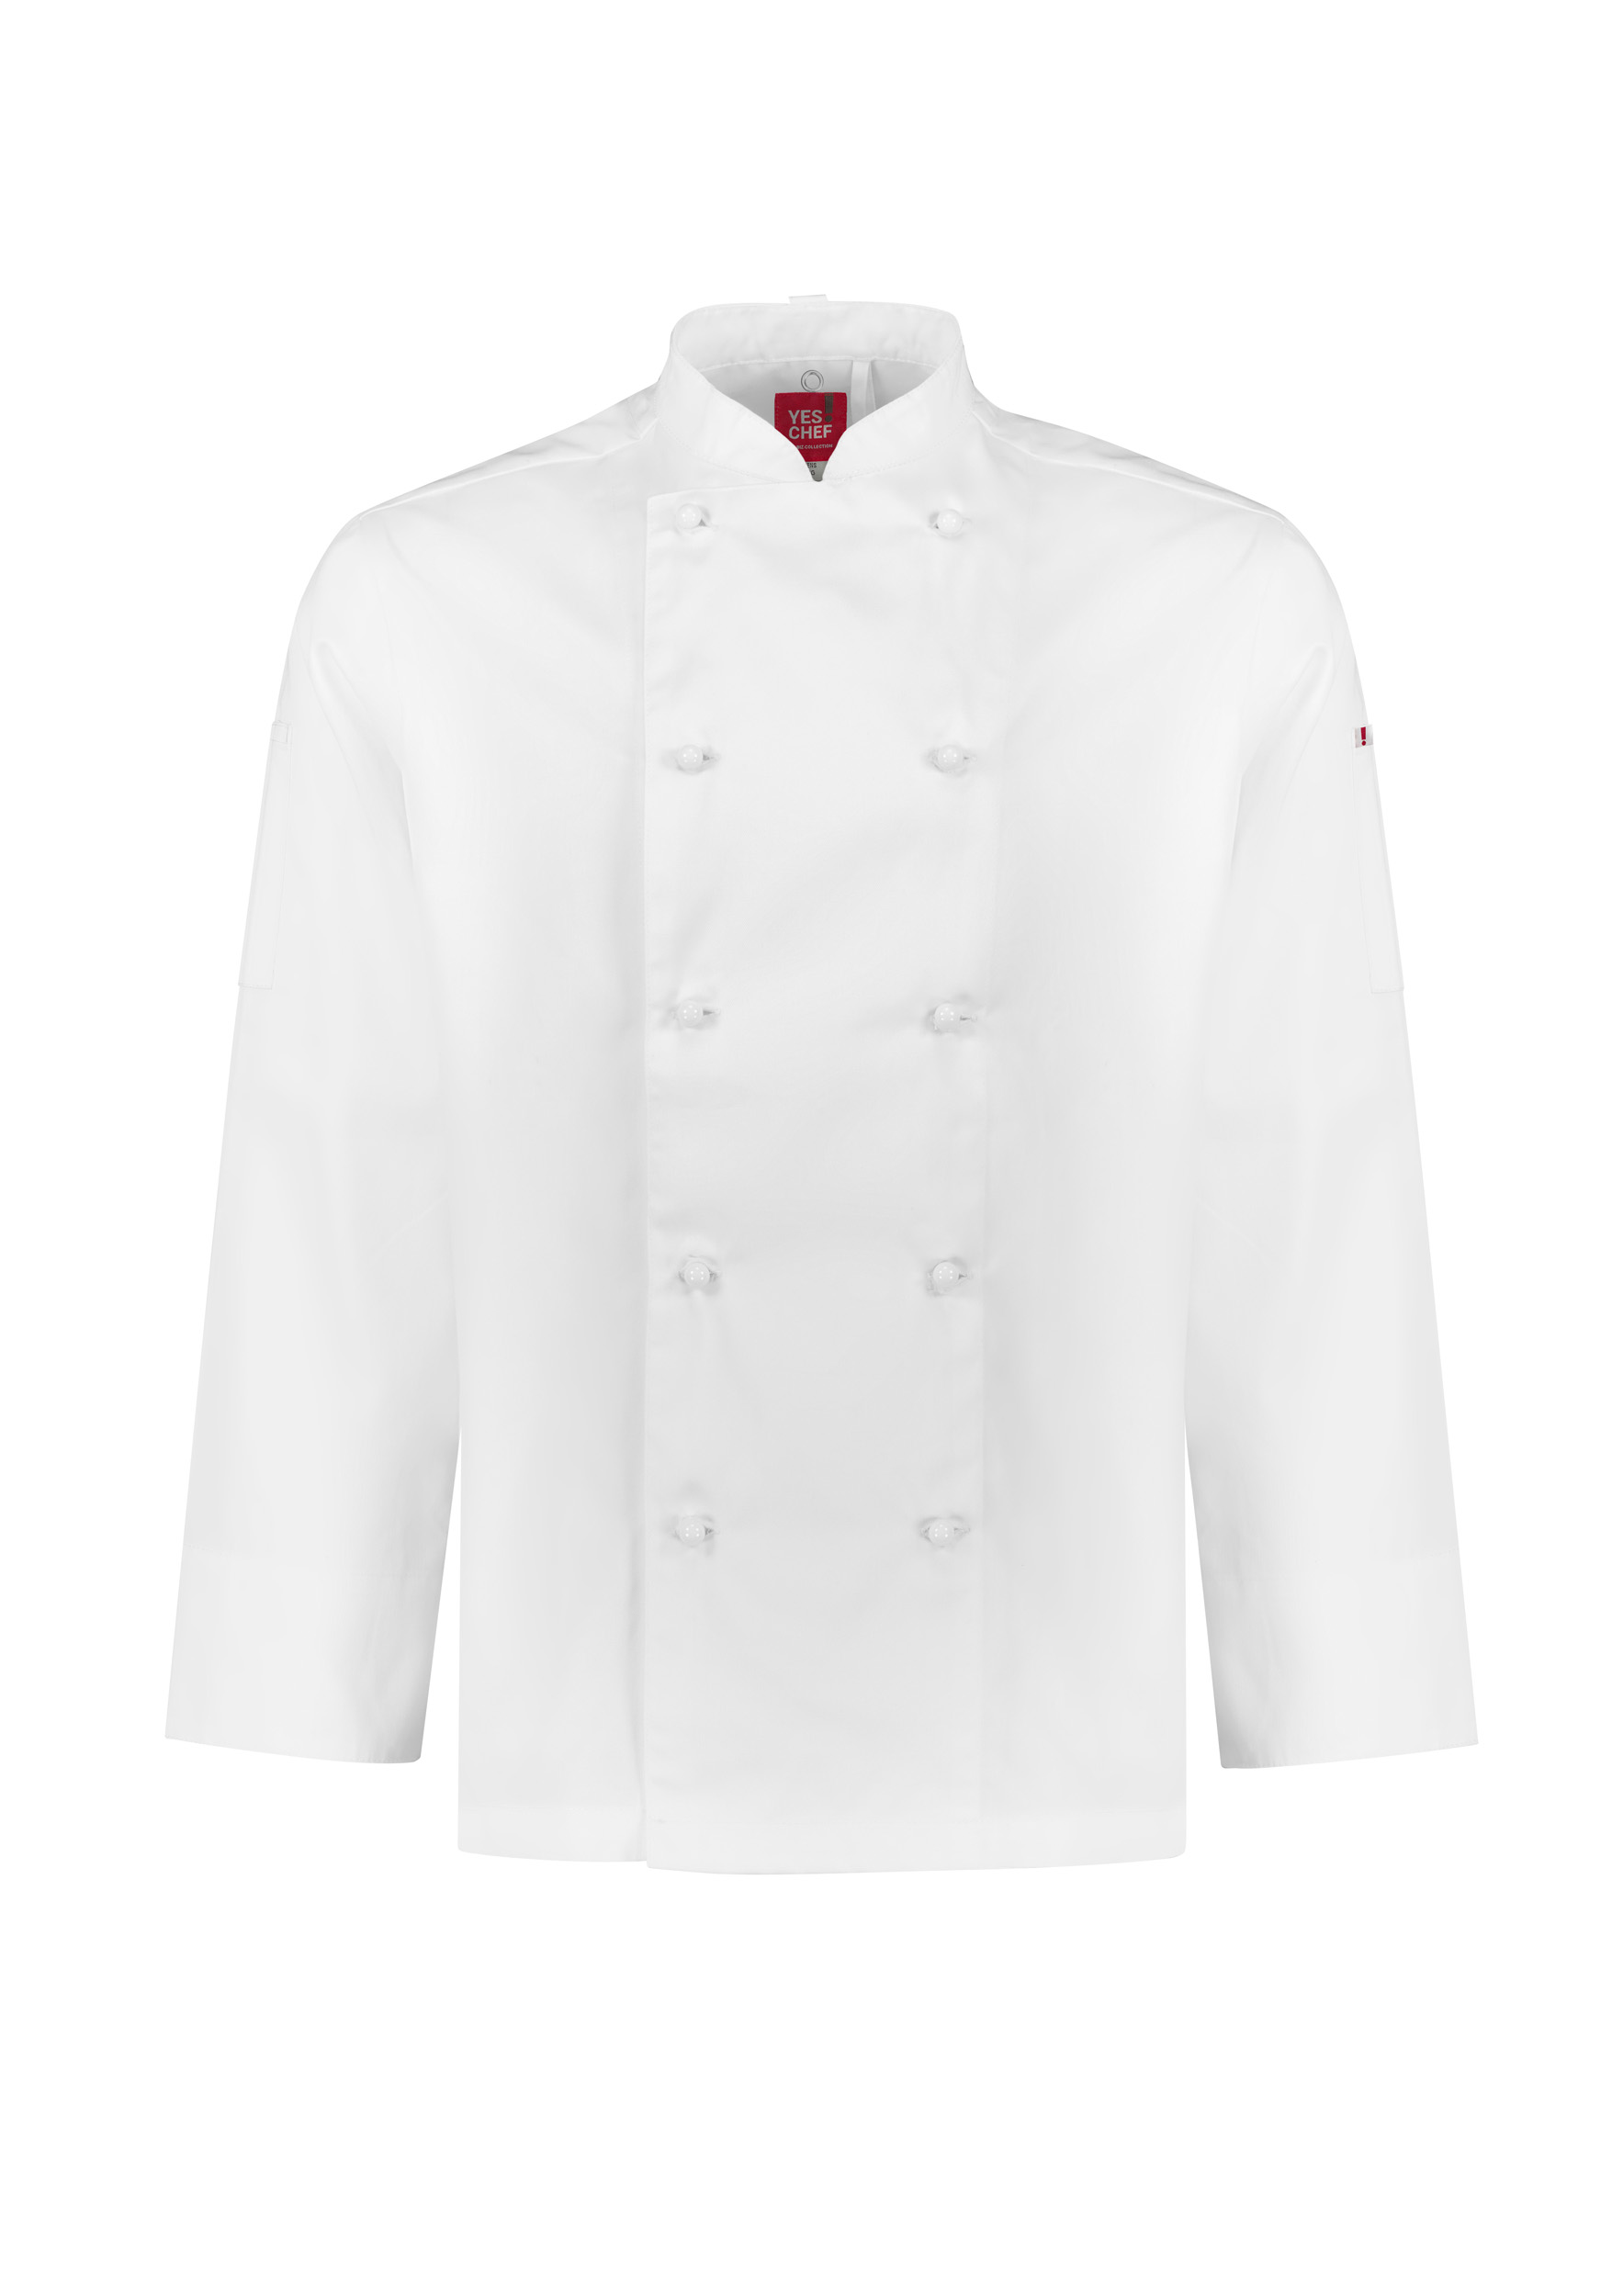 Al Dente Mens Chef Jacket by Biz Collection - Online Uniforms